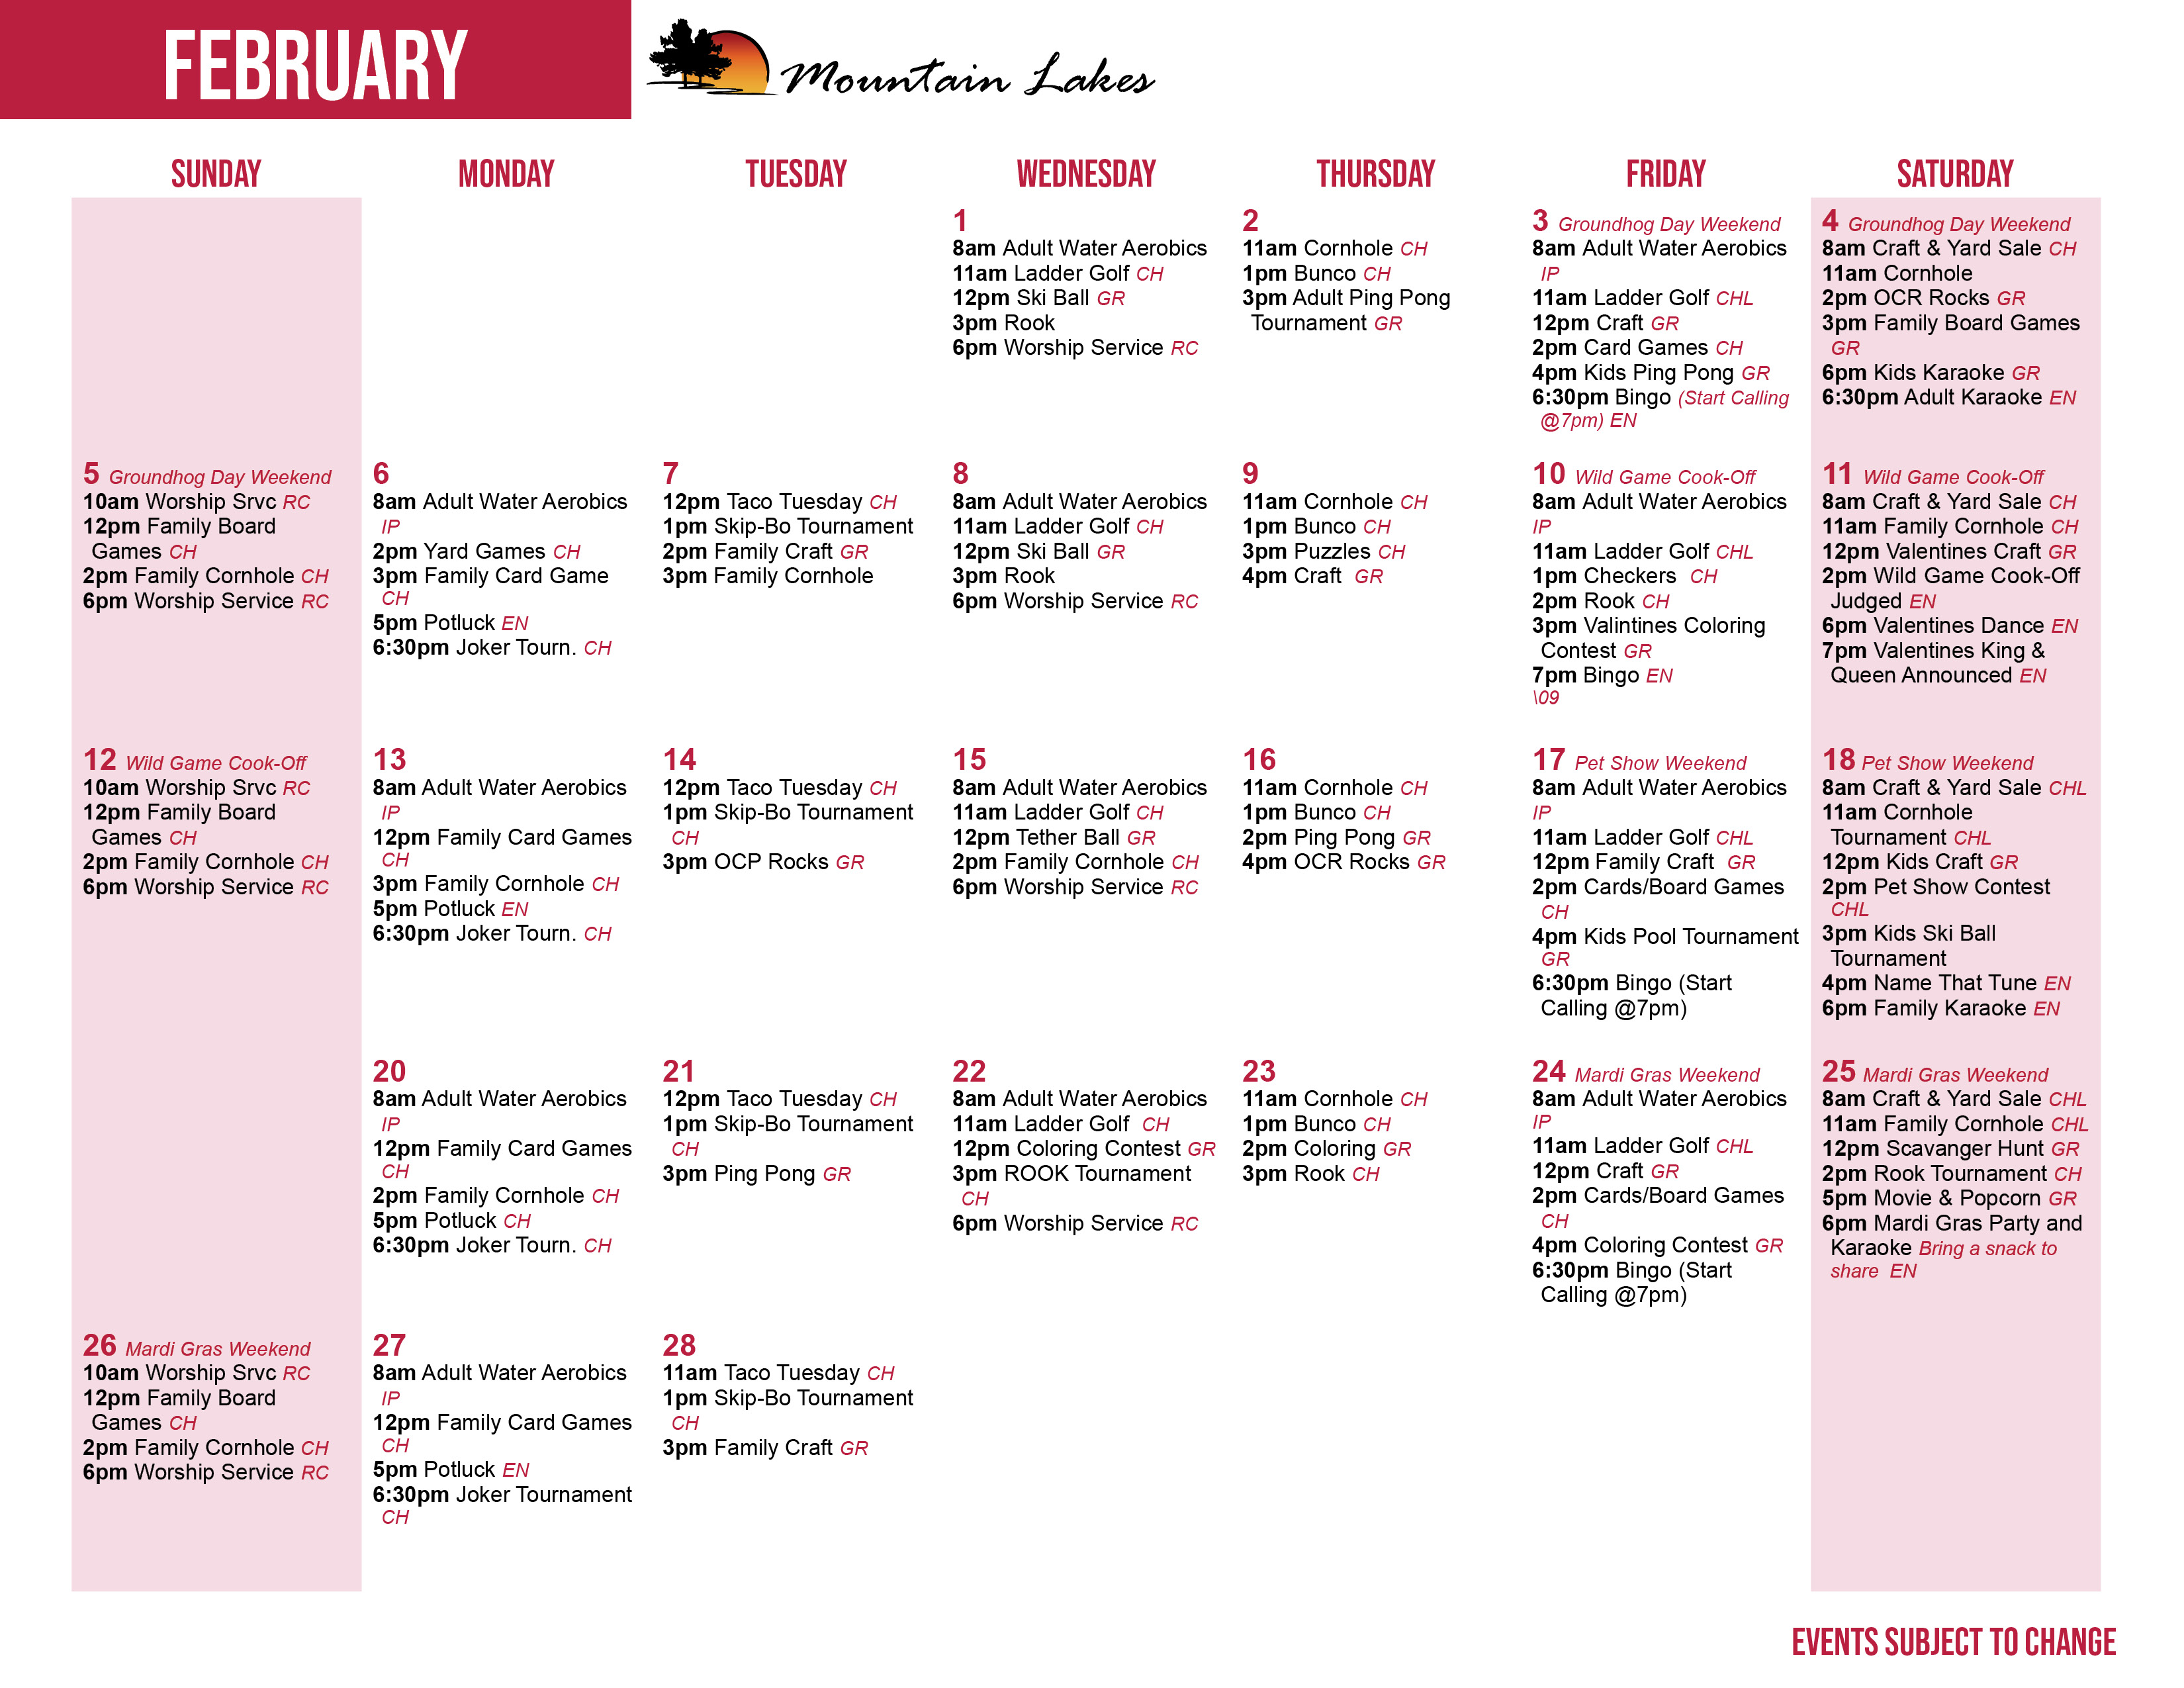 Mountain Lake's February Activity Calendars